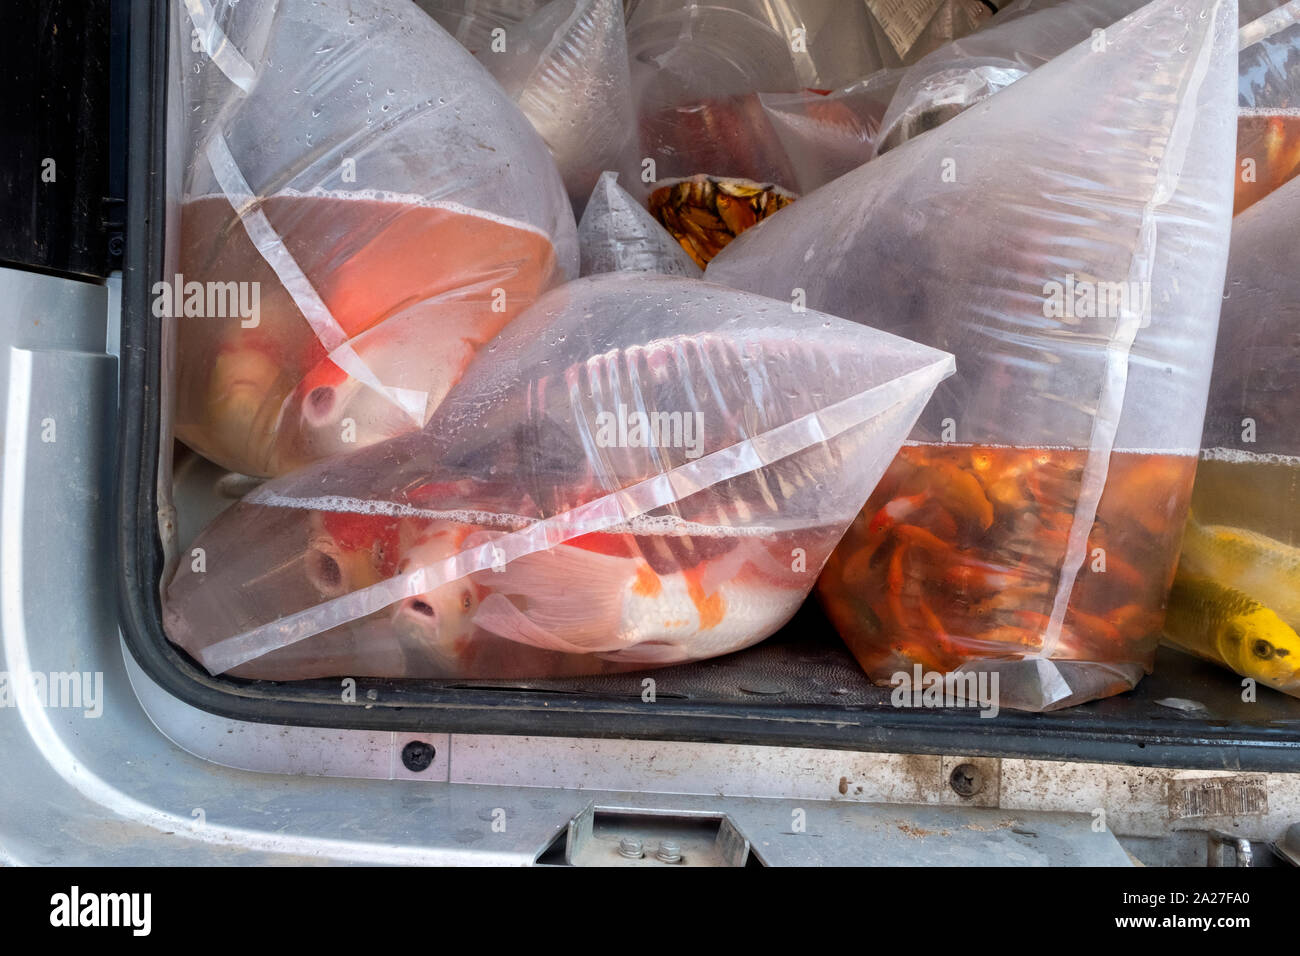 https://c8.alamy.com/comp/2A27FA0/transporting-fish-in-plastic-bags-2A27FA0.jpg